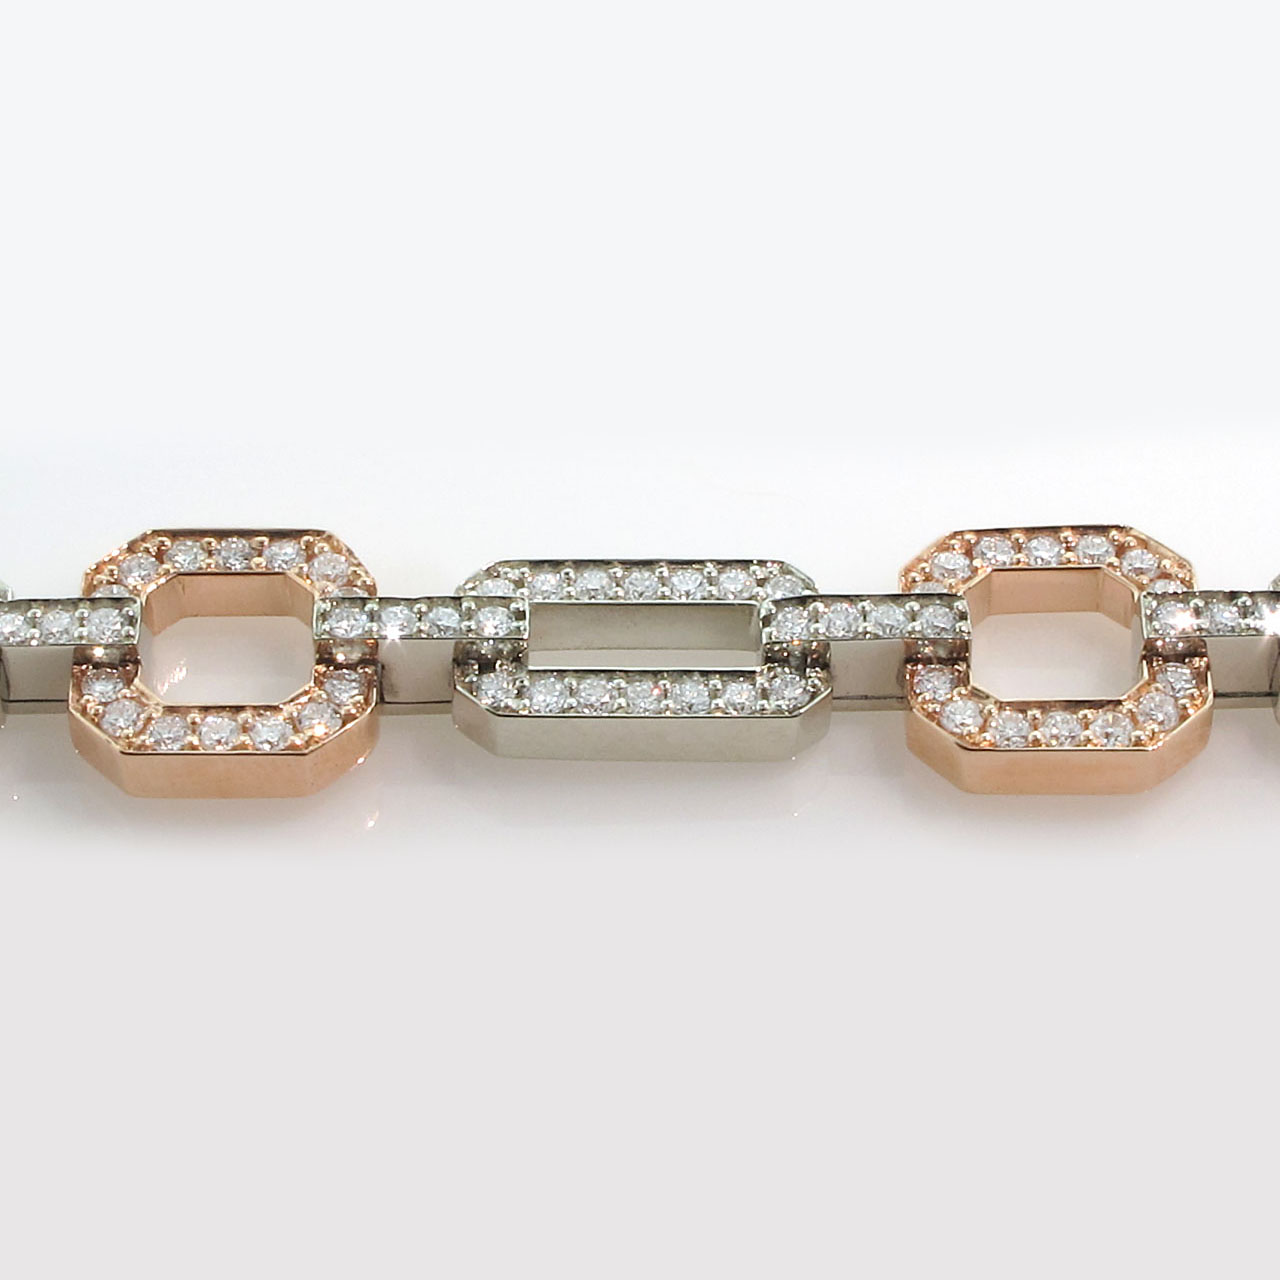 White and Rose Gold diamond studded bracelet pavee